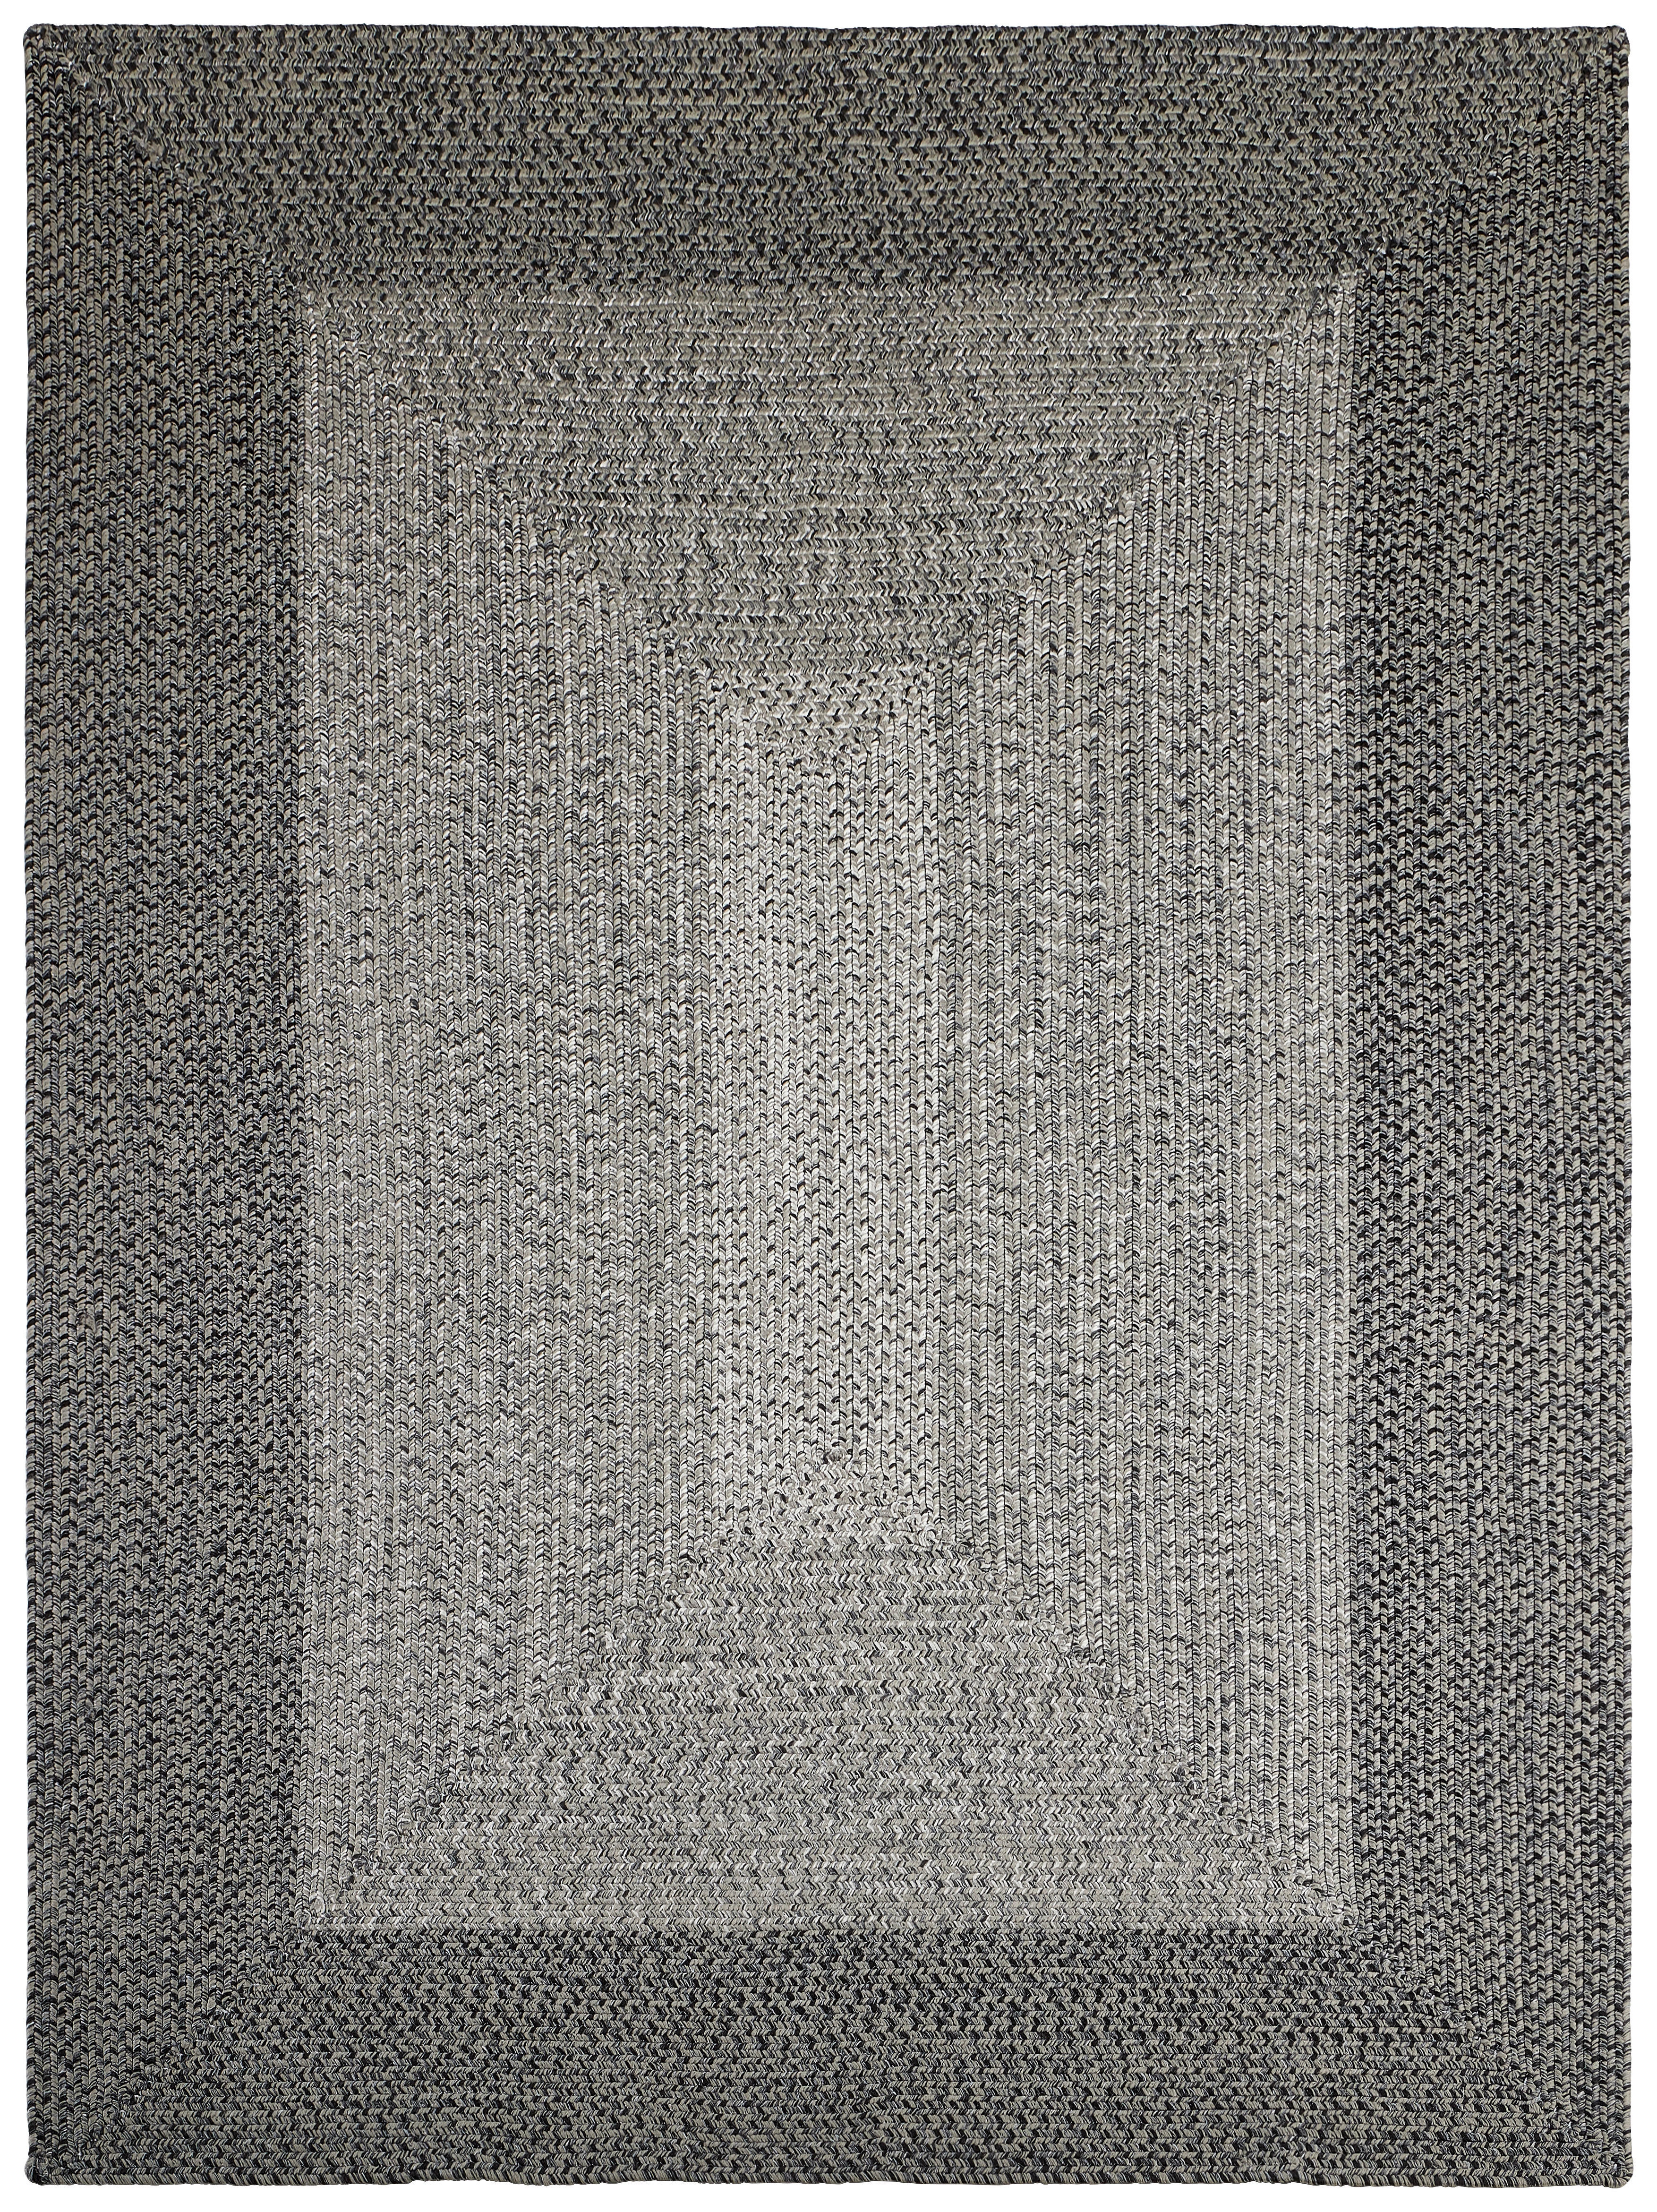 OUTDOORTEPPICH  Florida  - Dunkelgrau/Grau, Basics, Textil (80/150cm) - Novel